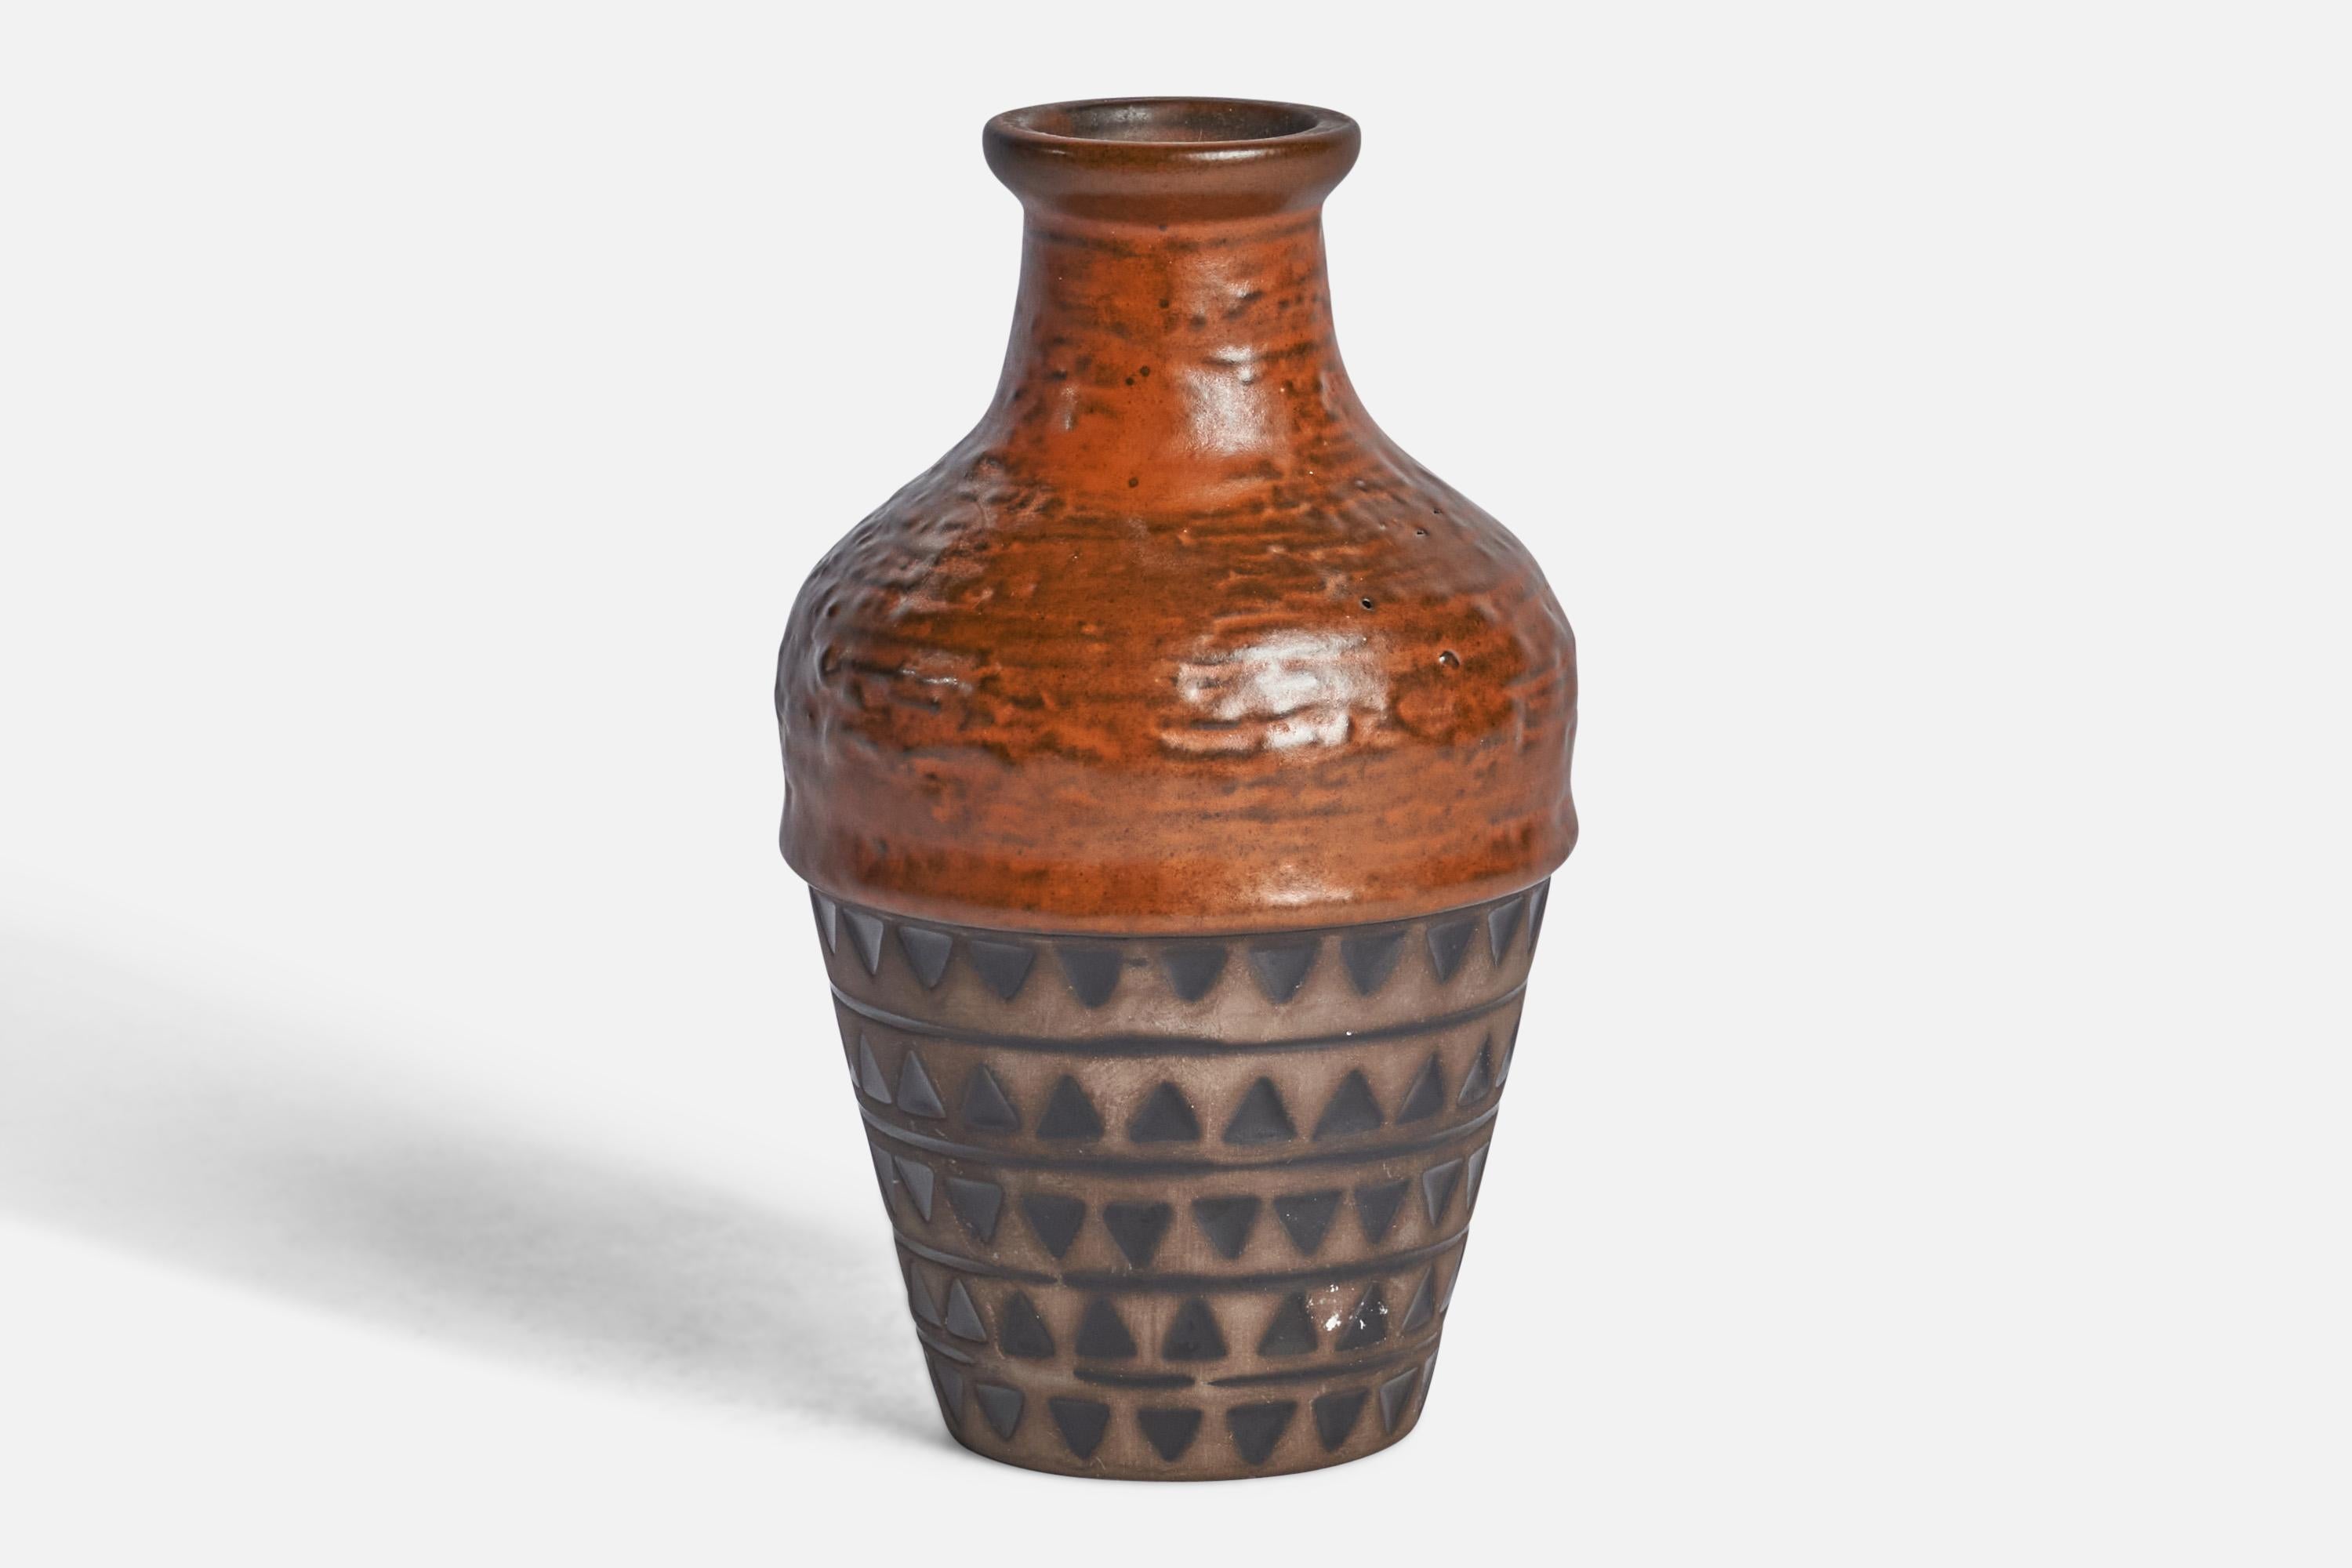 A brown and grey-glazed earthenware vase by Upsala Ekeby, Sweden, c. 1950s.